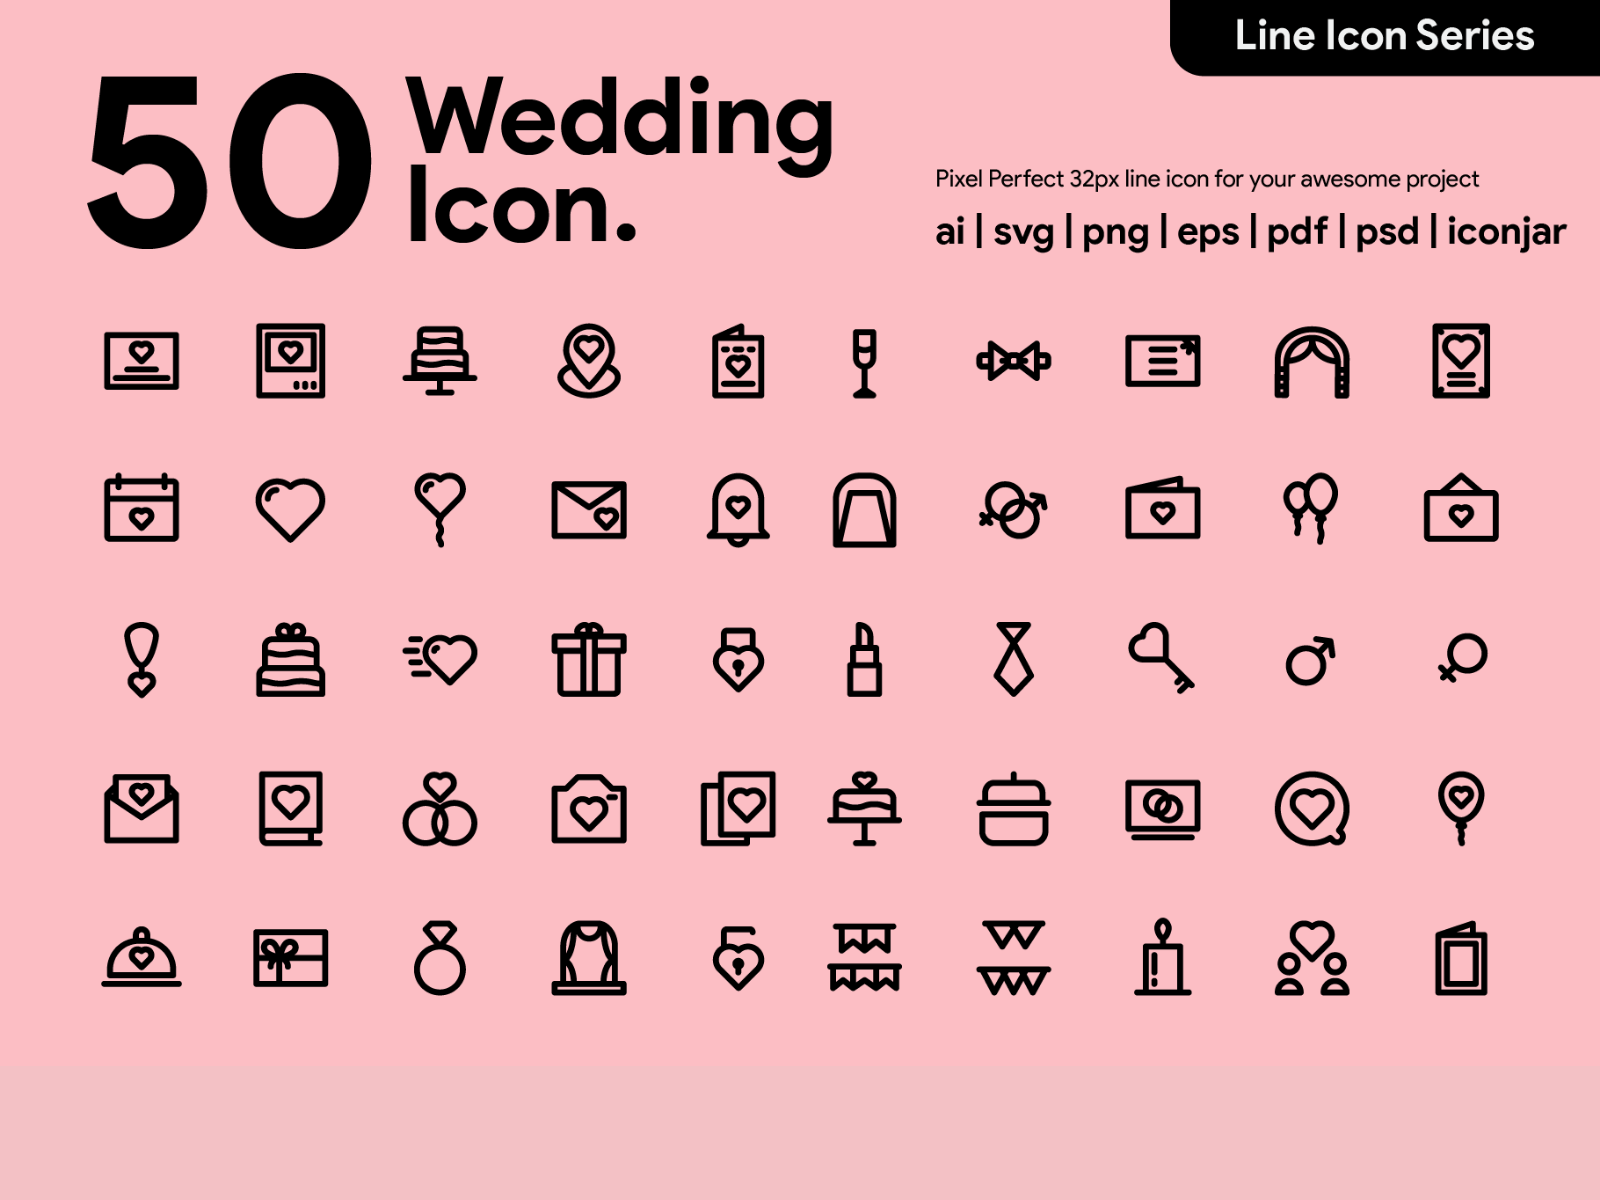 App icons design idea #290: Kawaicon - 50 Wedding Line Icons